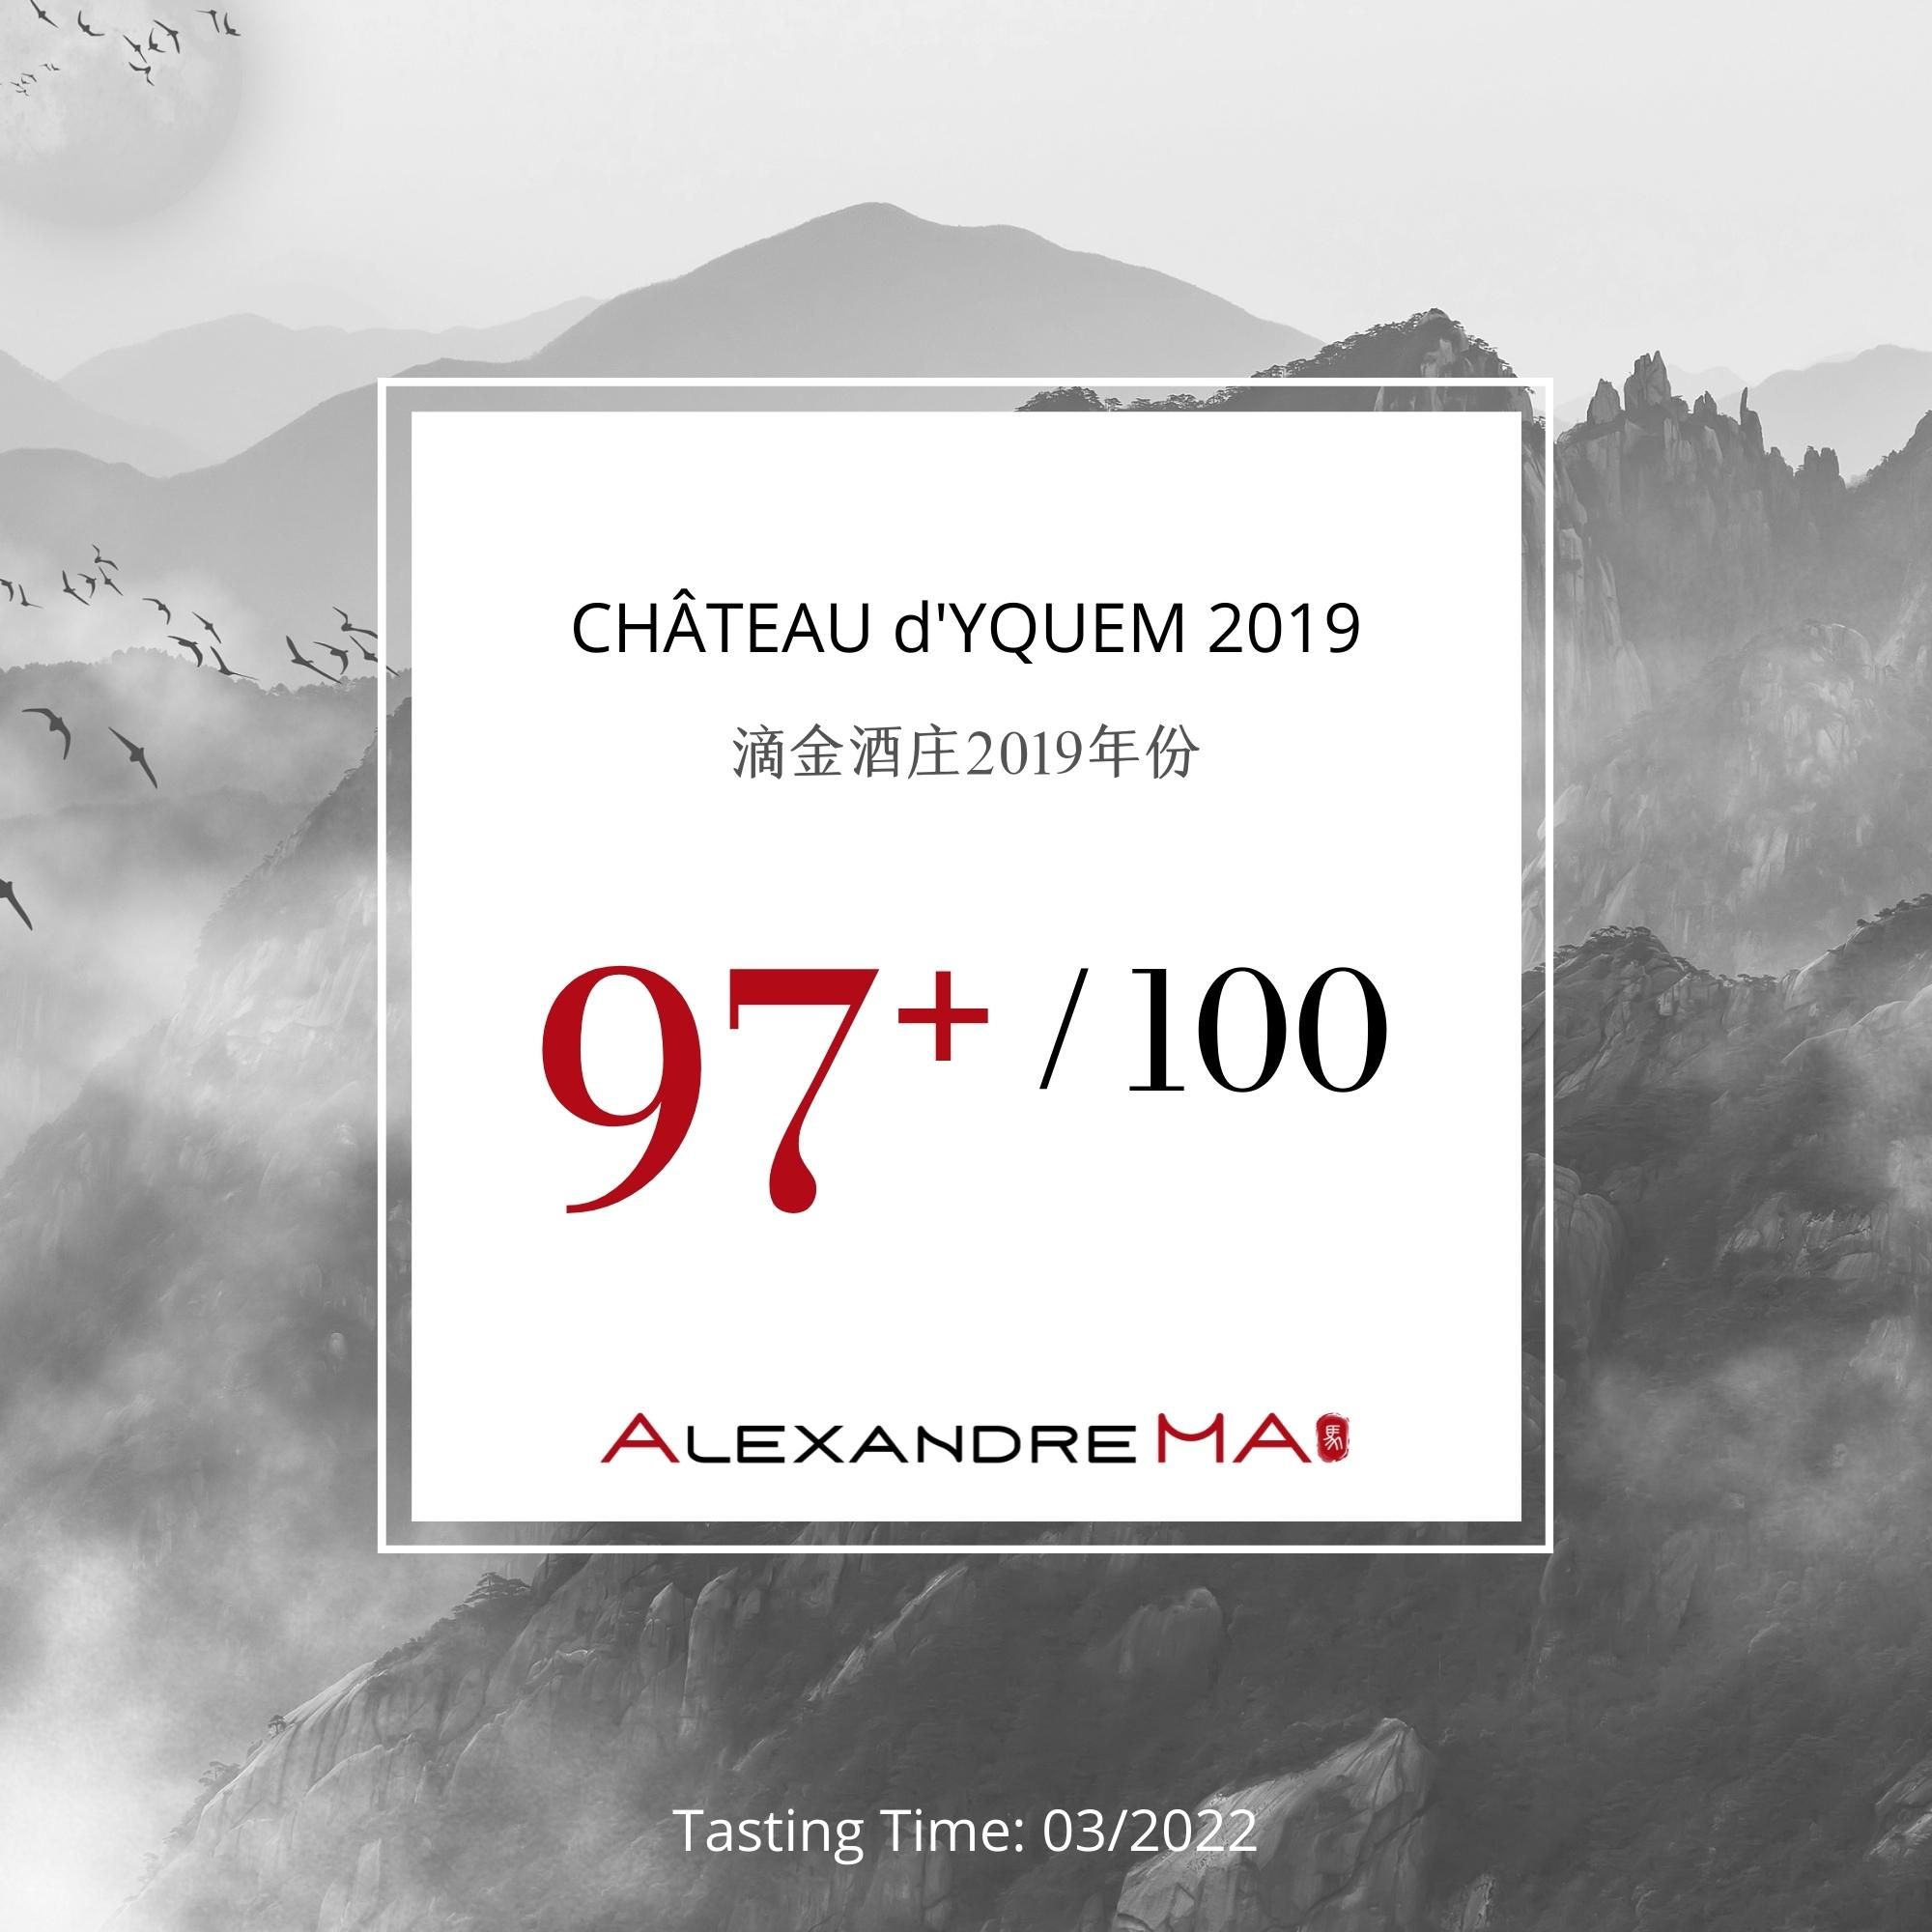 Château d’Yquem 滴金酒庄 2019 - Alexandre Ma